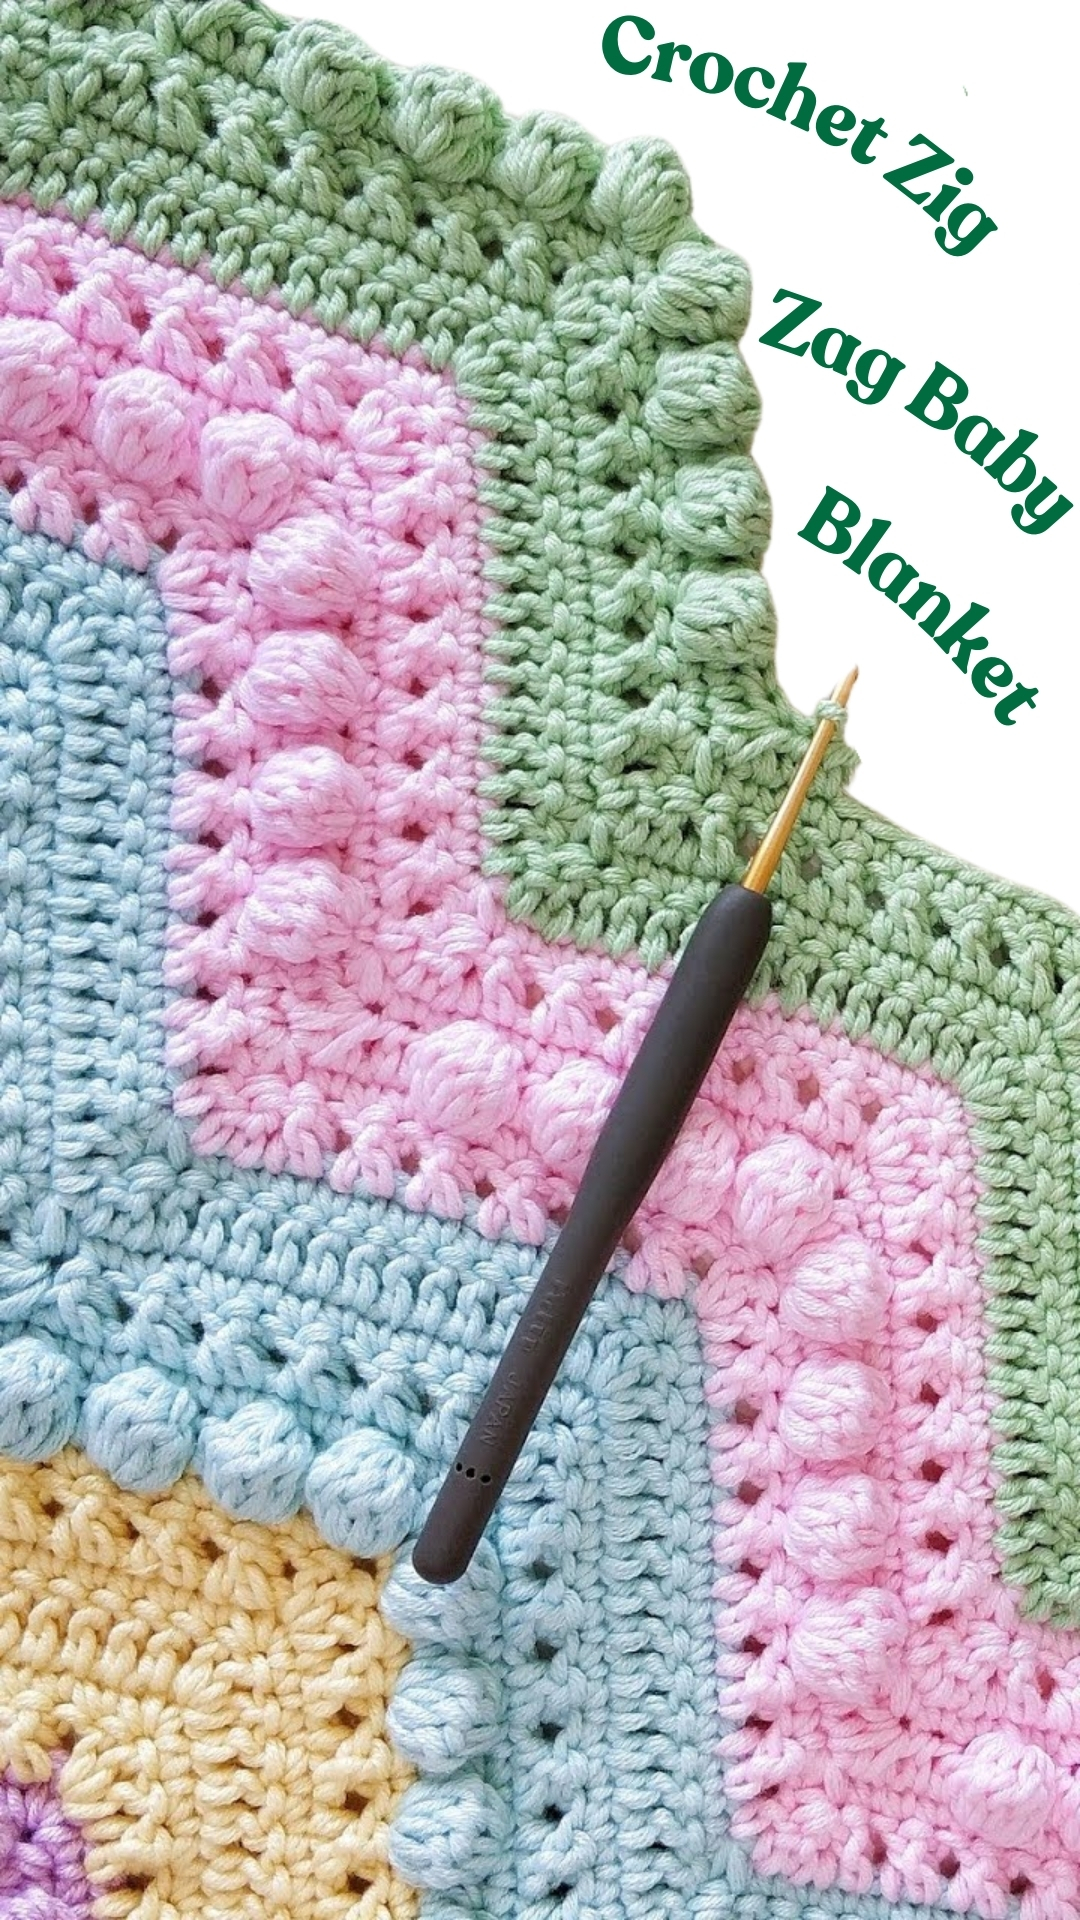 Crochet Zig-Zag Blanket – Nerd’s Guide